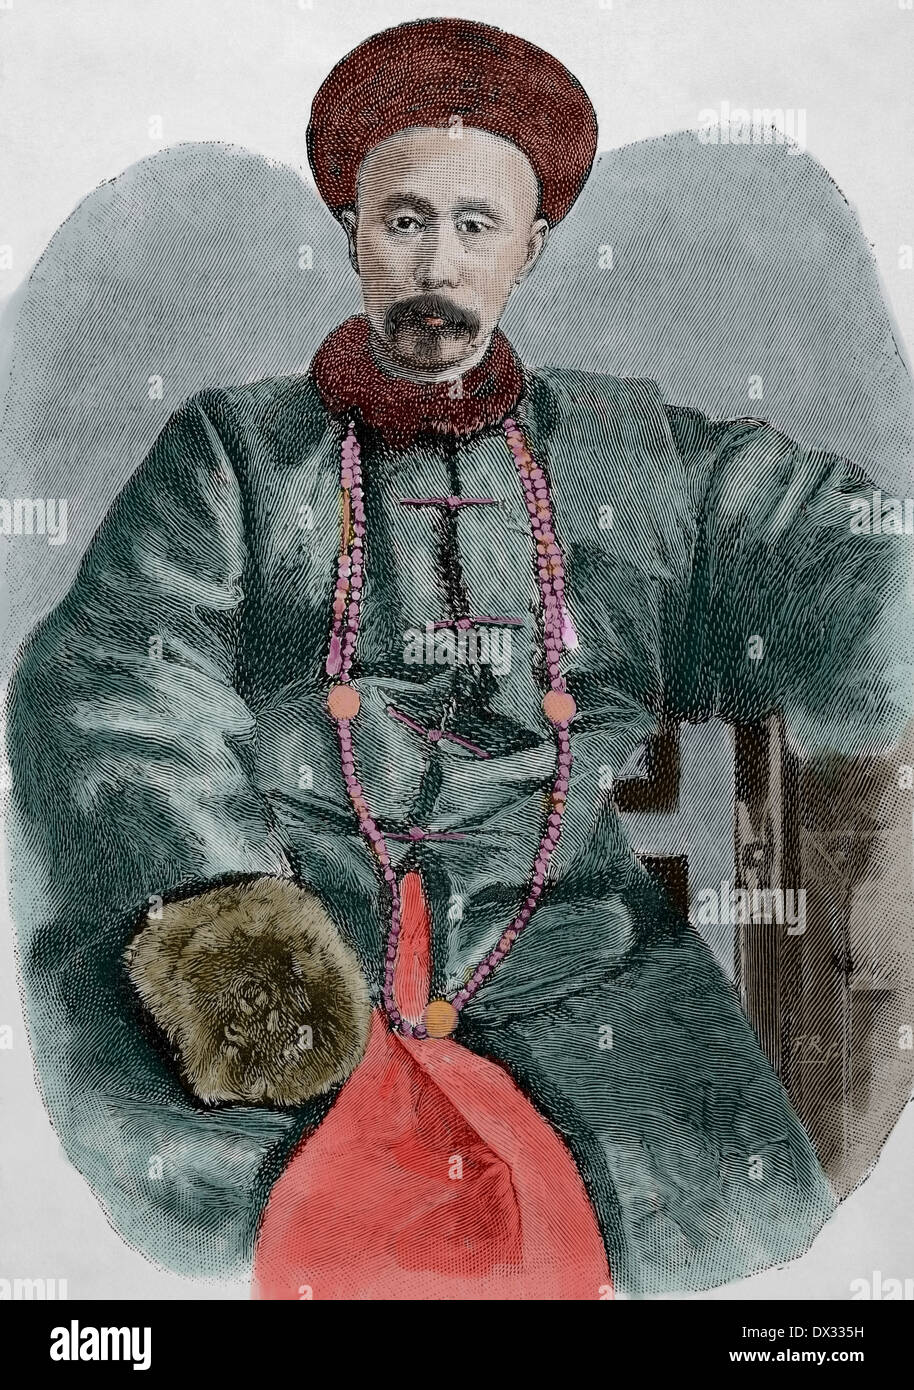 Li Hongzhang or Li Hung Chang (1823-1901). Politician, general, and diplomat of the late Qing Empire. Engraving. Colored. Stock Photo